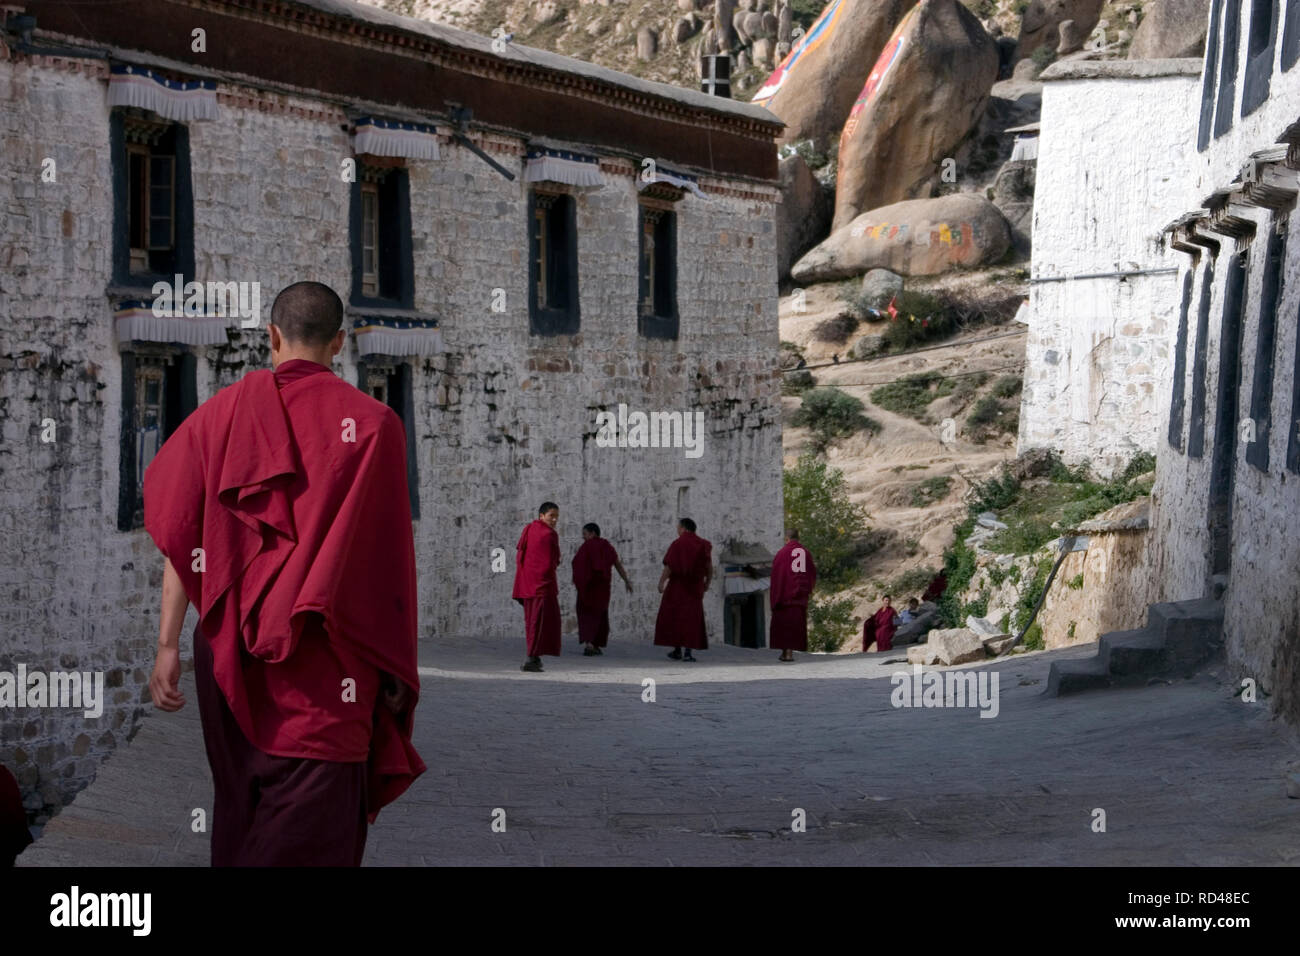 Naiqiong Temple near Lhasa Tibet Stock Photo